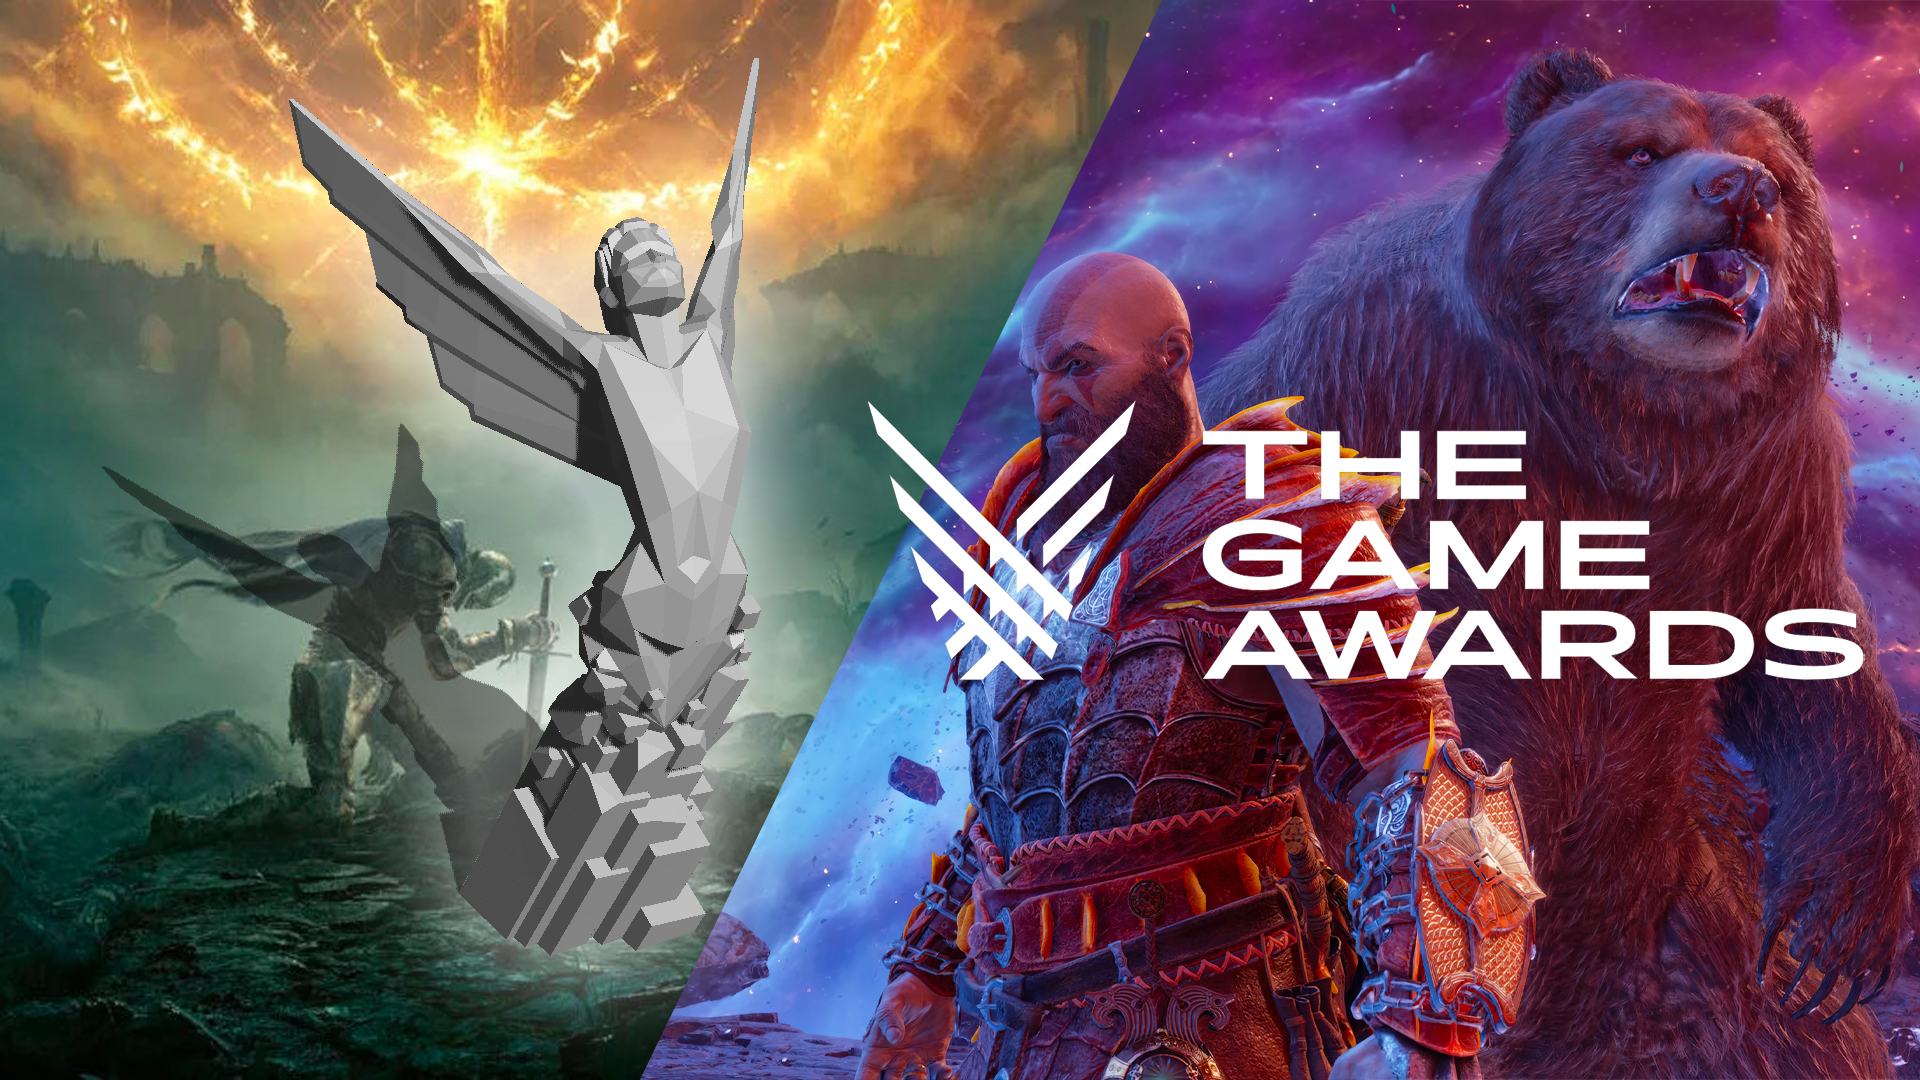 Awards: 2018 Video Game Awards Announced